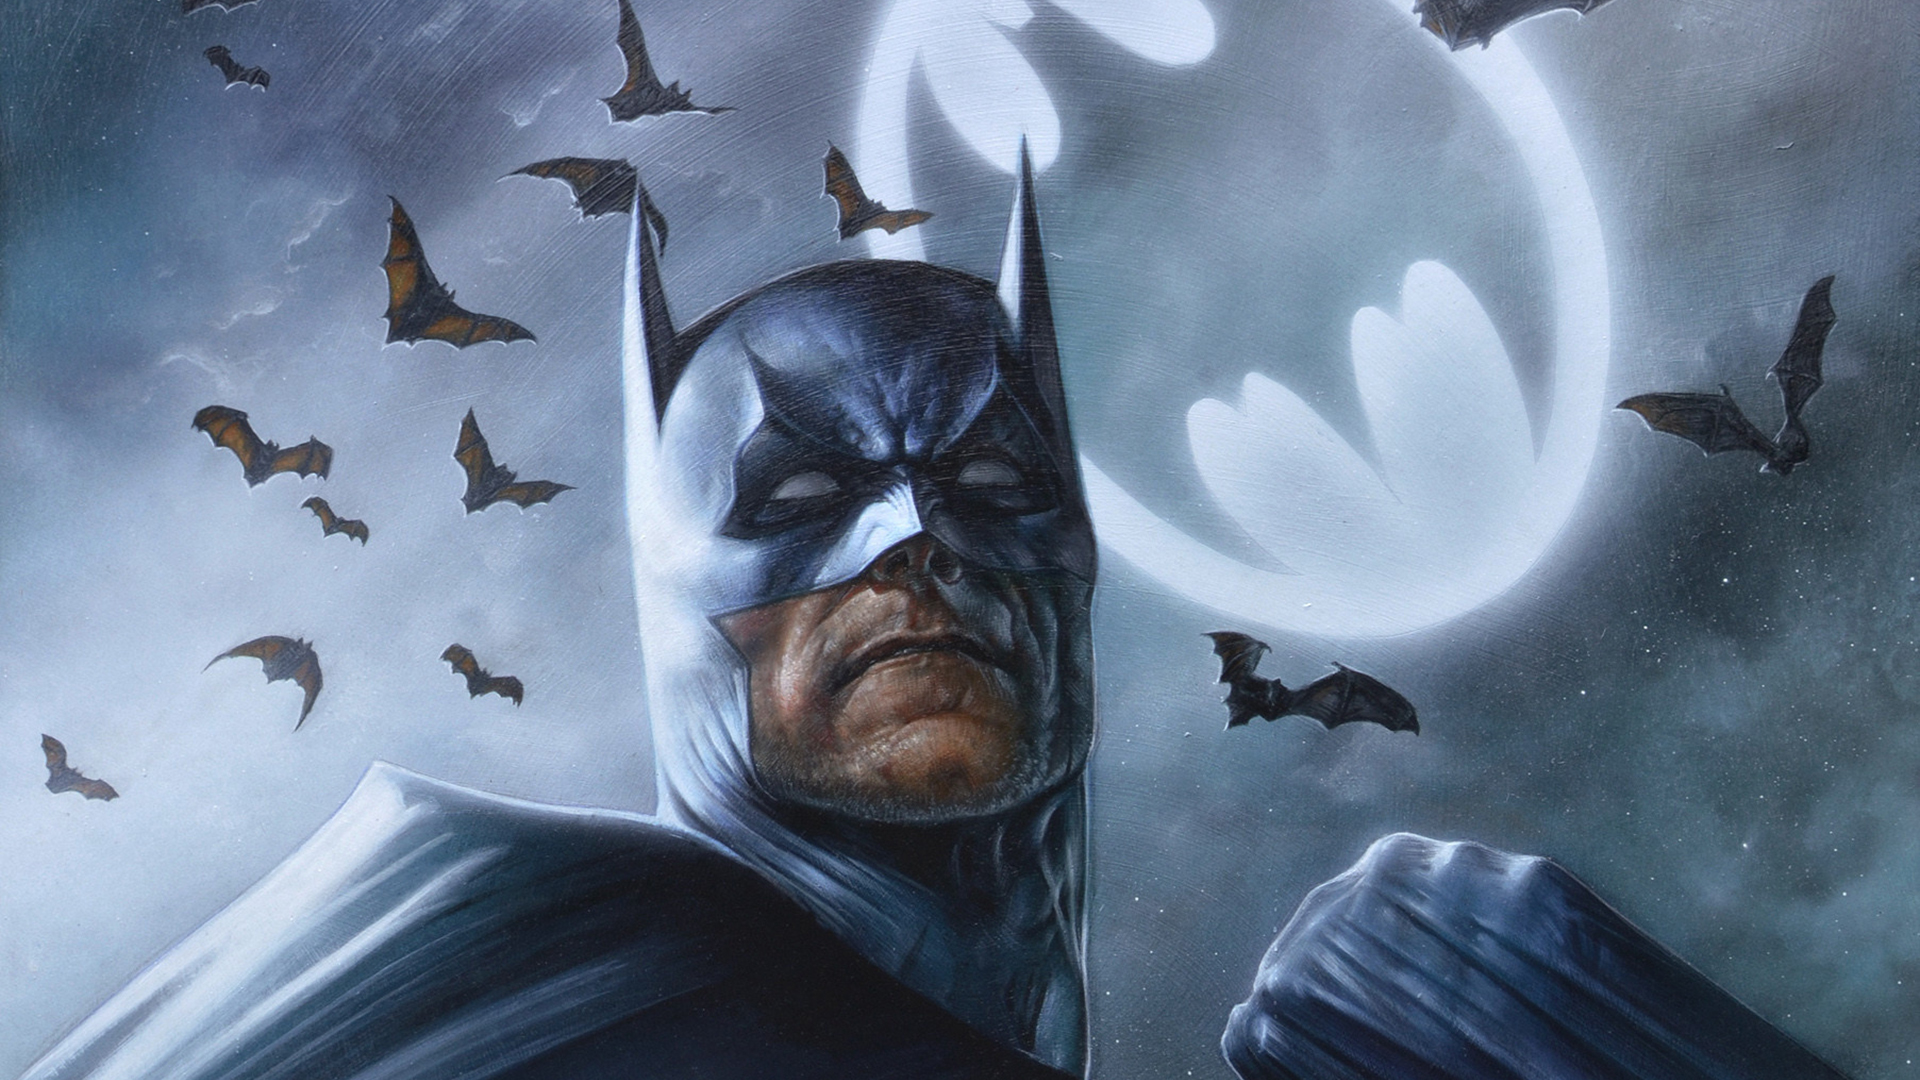 The Batman Dc Comic 4k Wallpaper,HD Superheroes Wallpapers,4k